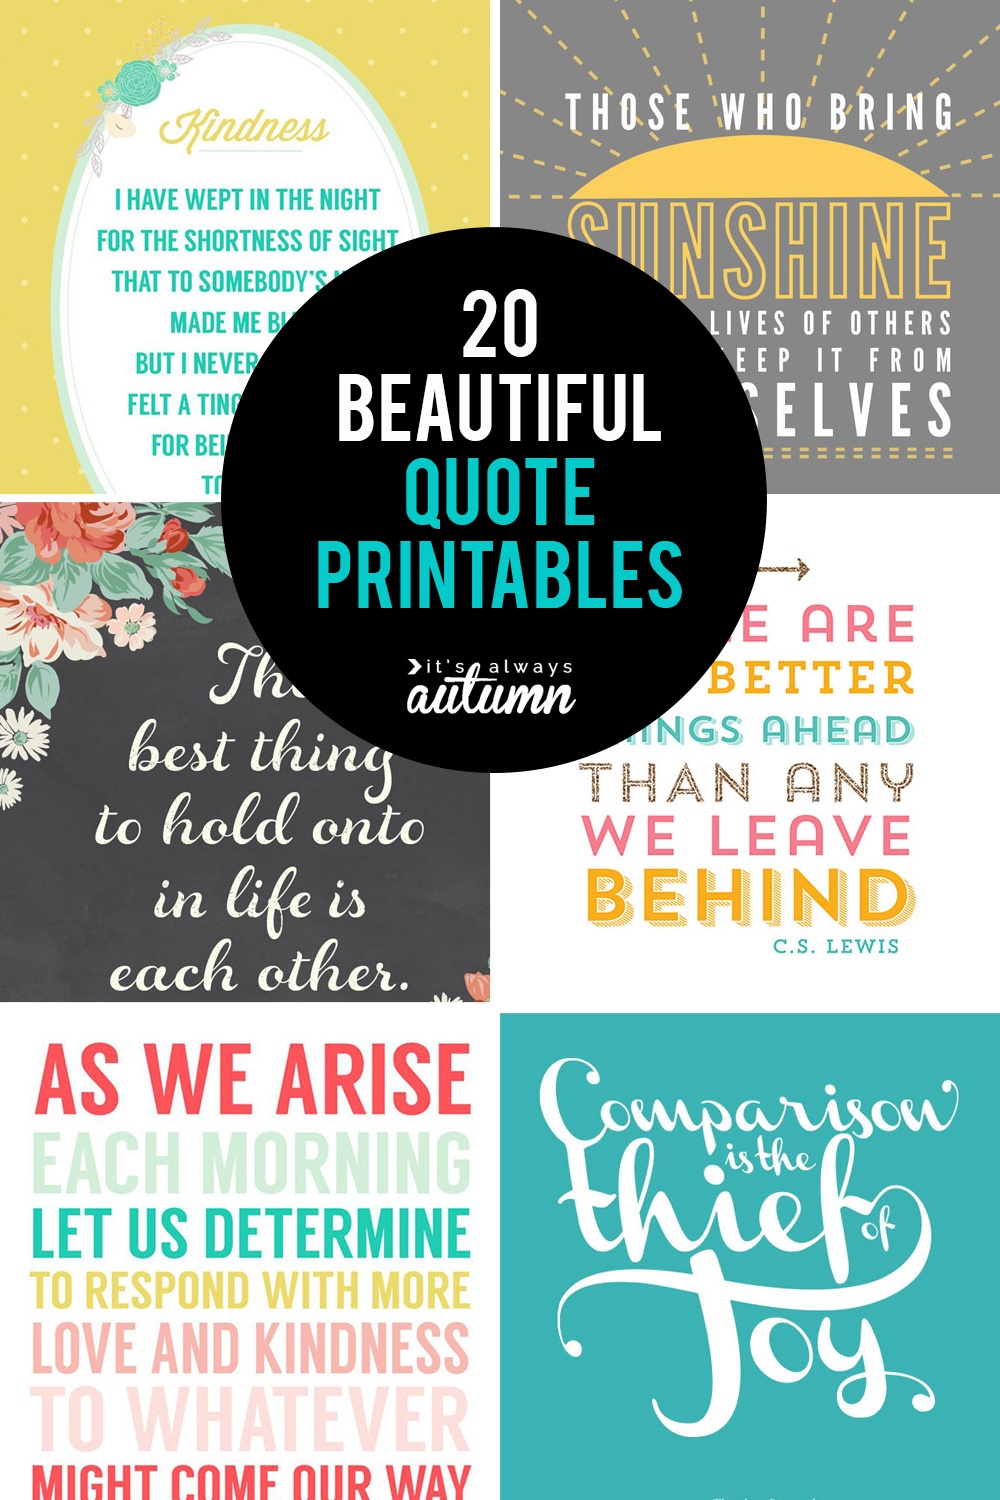 20 Gorgeous Printable Quotes | Free Inspirational Quote Prints - Free Printable Quotes For Office